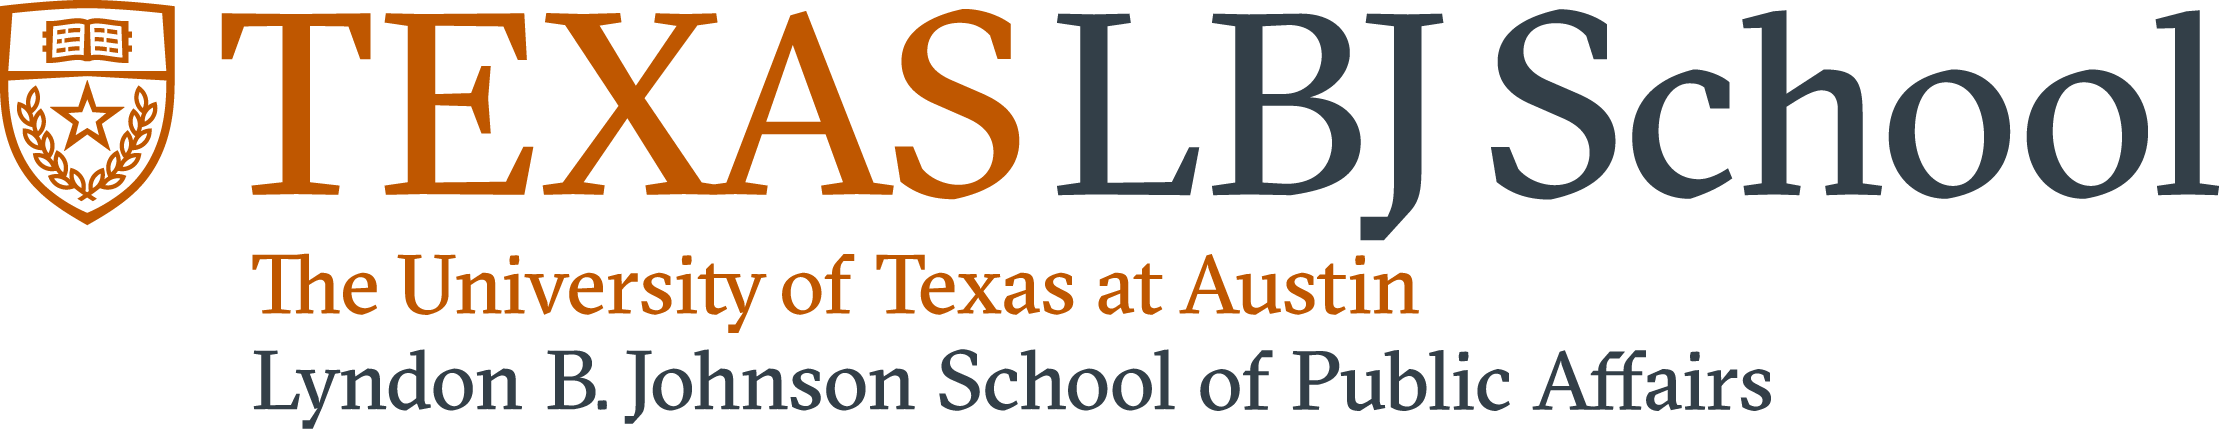 The University of Texas at Austin - LBJ School